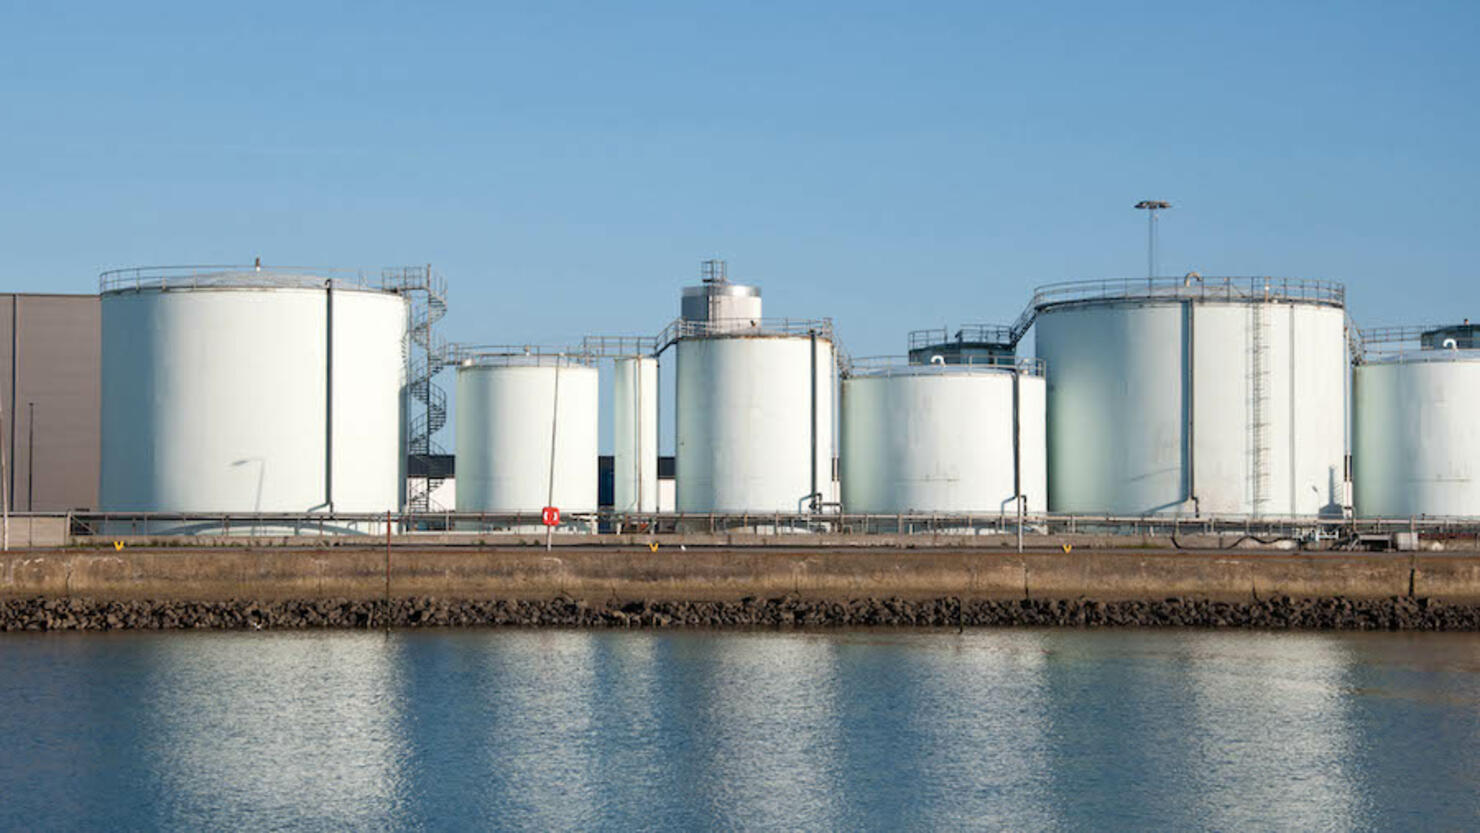 Industrial oil storage tanks